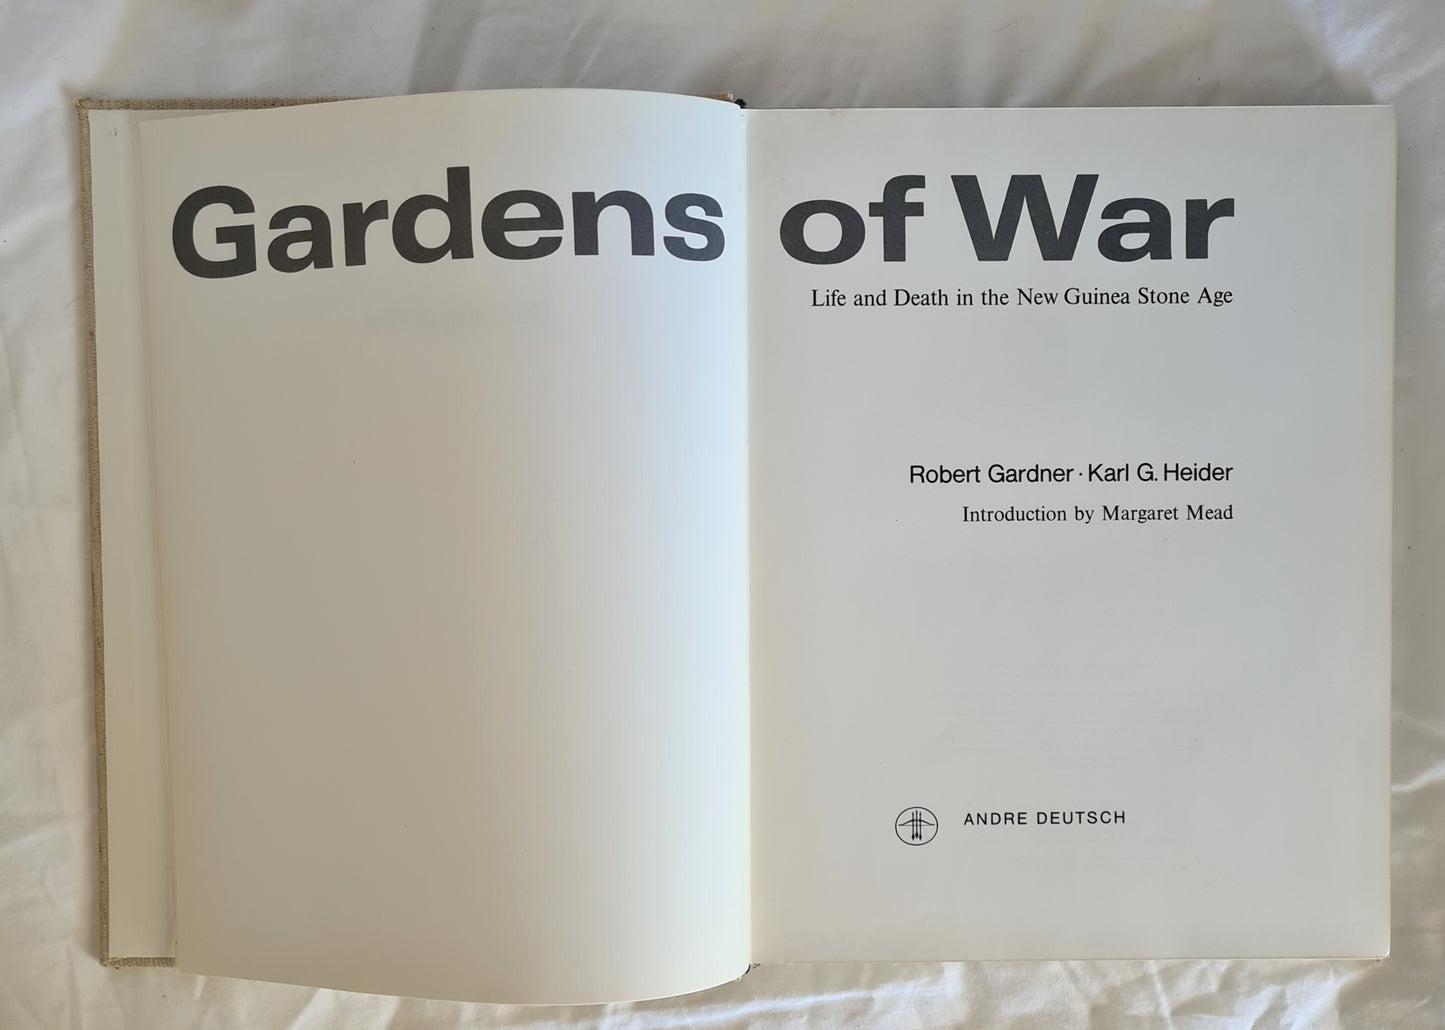 Gardens of War by Robert Gardner and Karl G. Heider